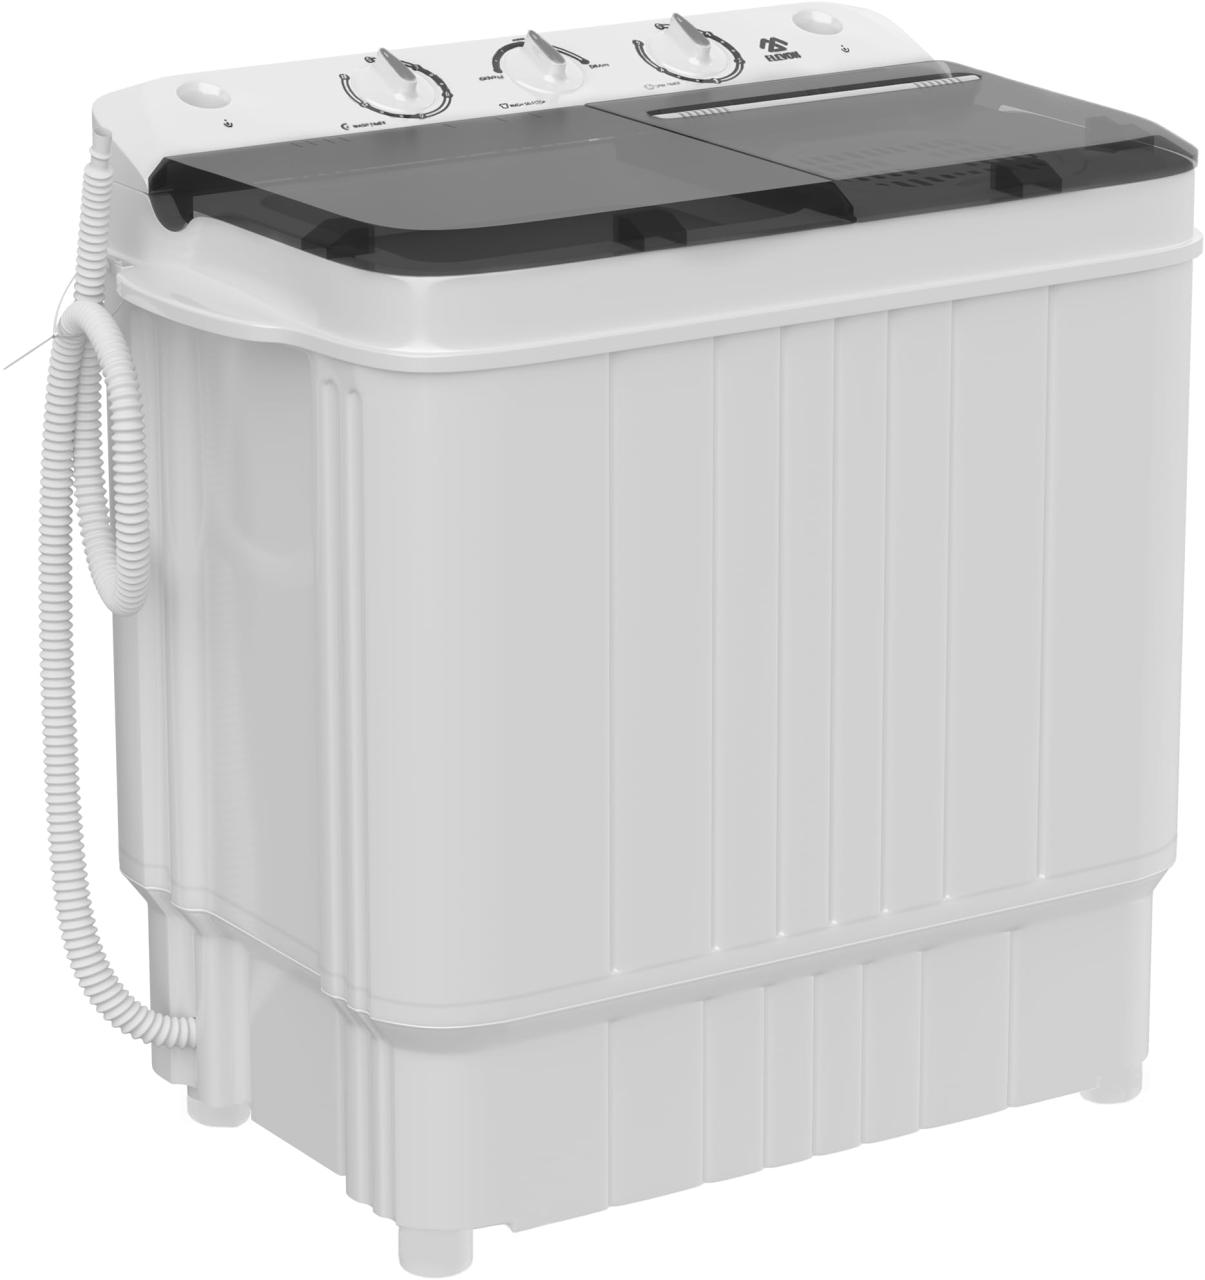 Elevon Portable Washing Machine